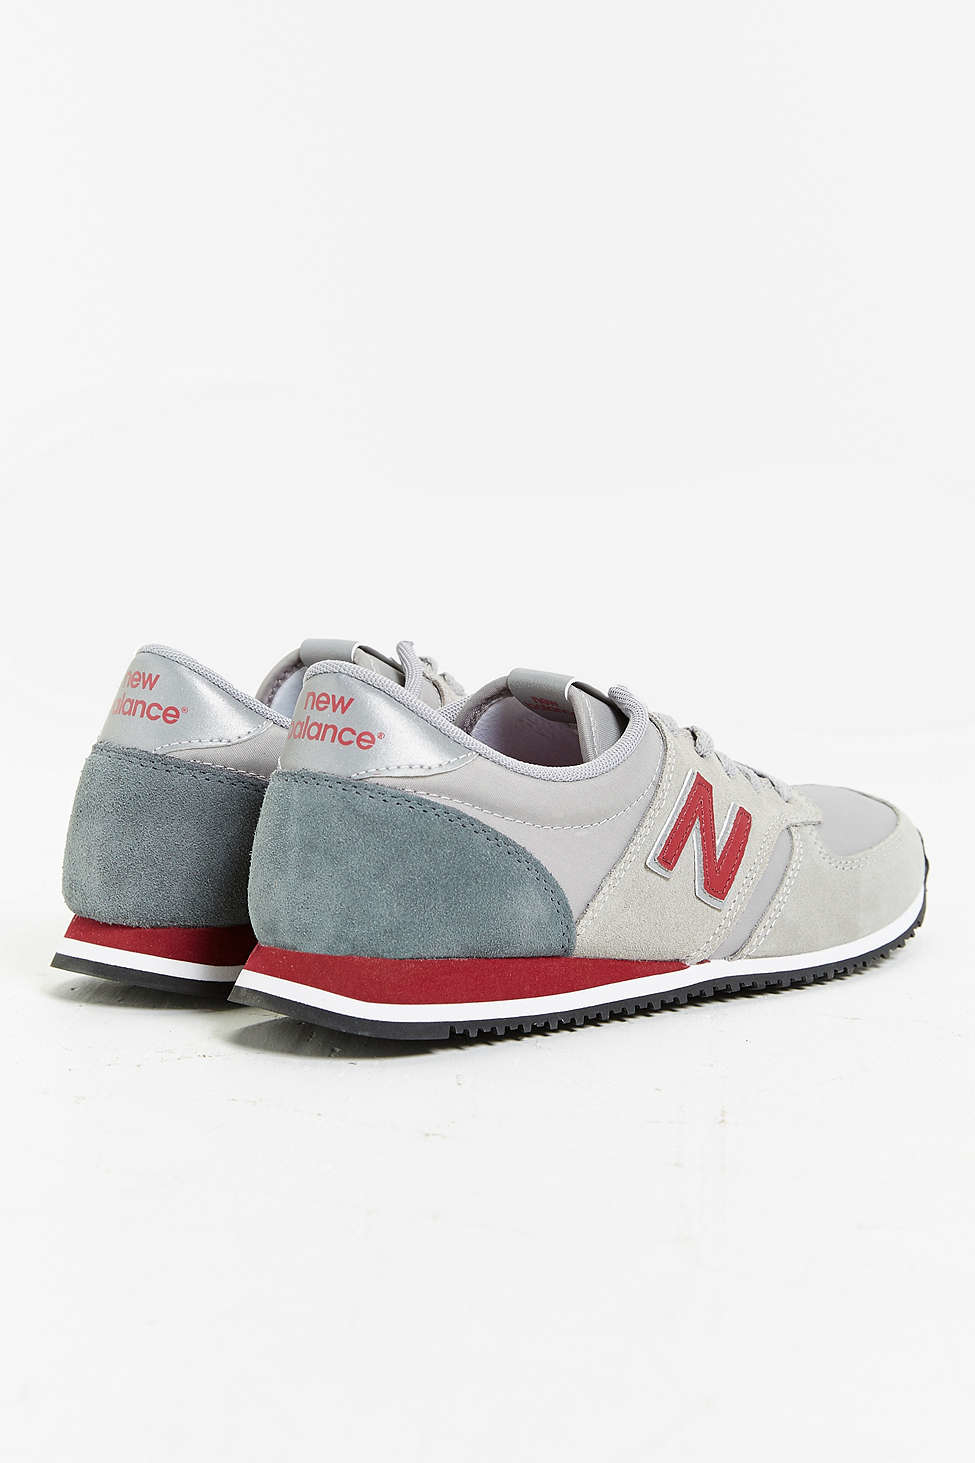 New Balance 420 '70s Running Sneaker in Grey (Gray) for Men - Lyst